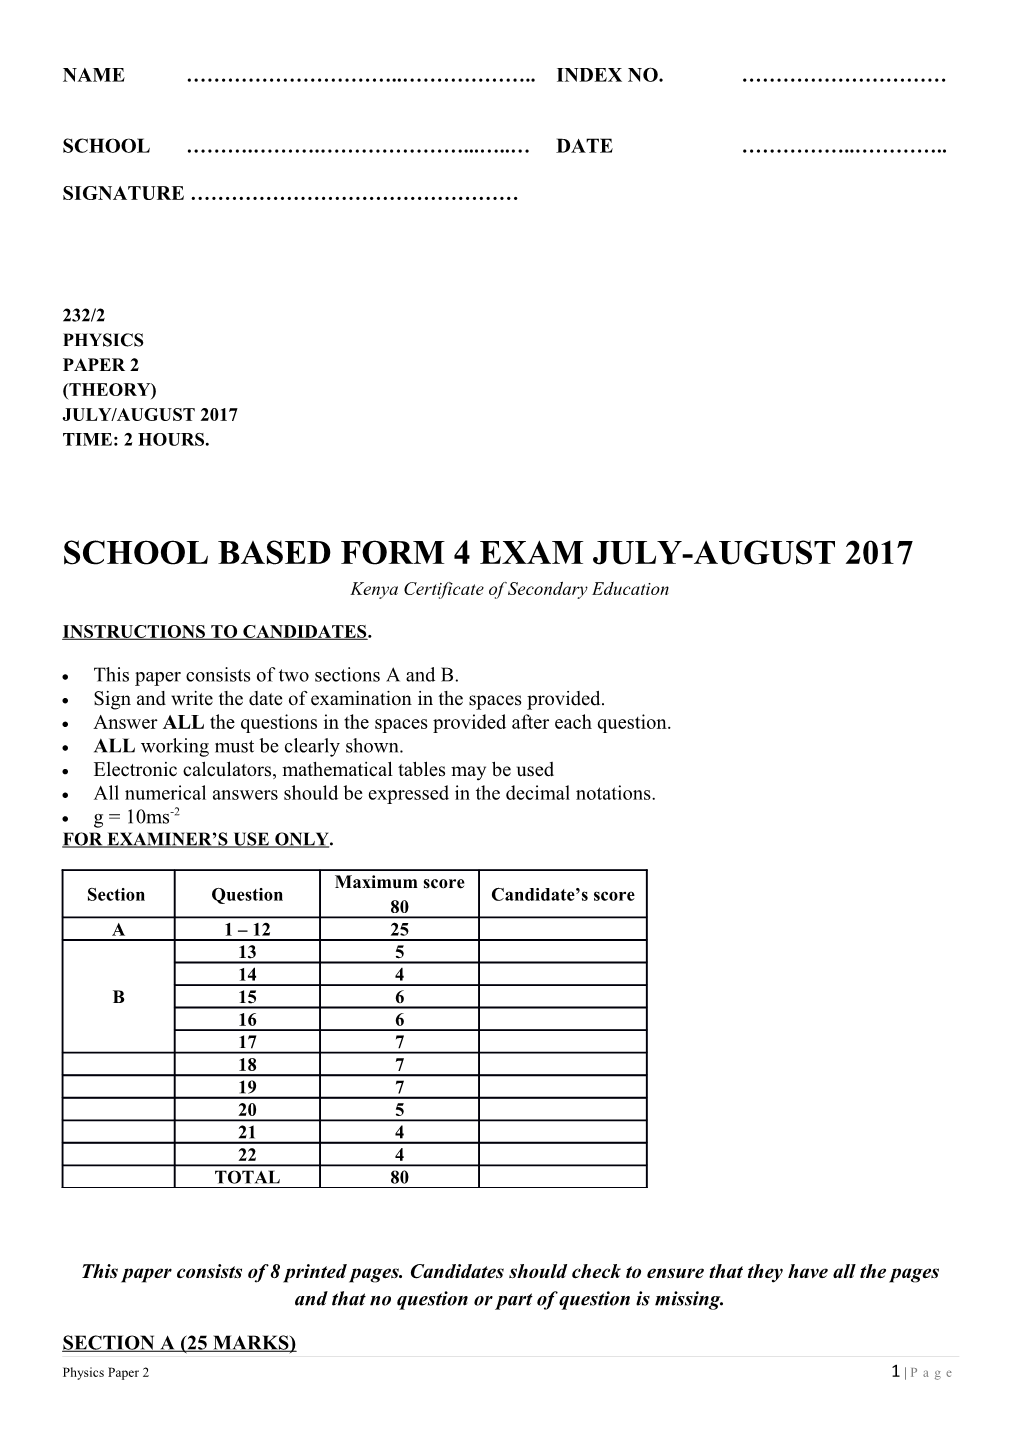 School Based Form 4 Exam July-August 2017